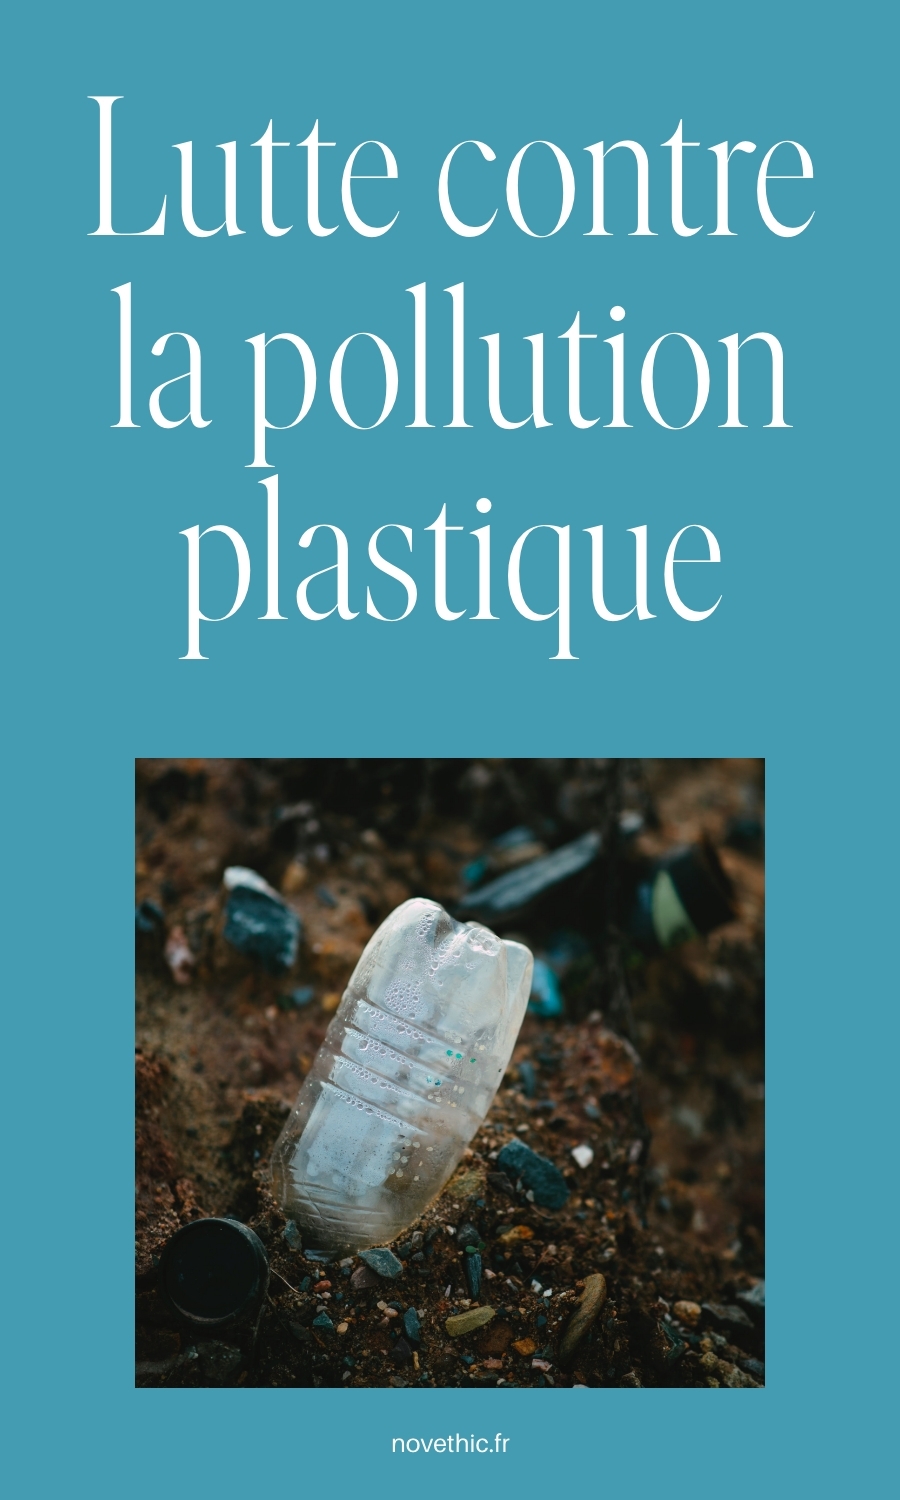 Fighting against plastic pollution 